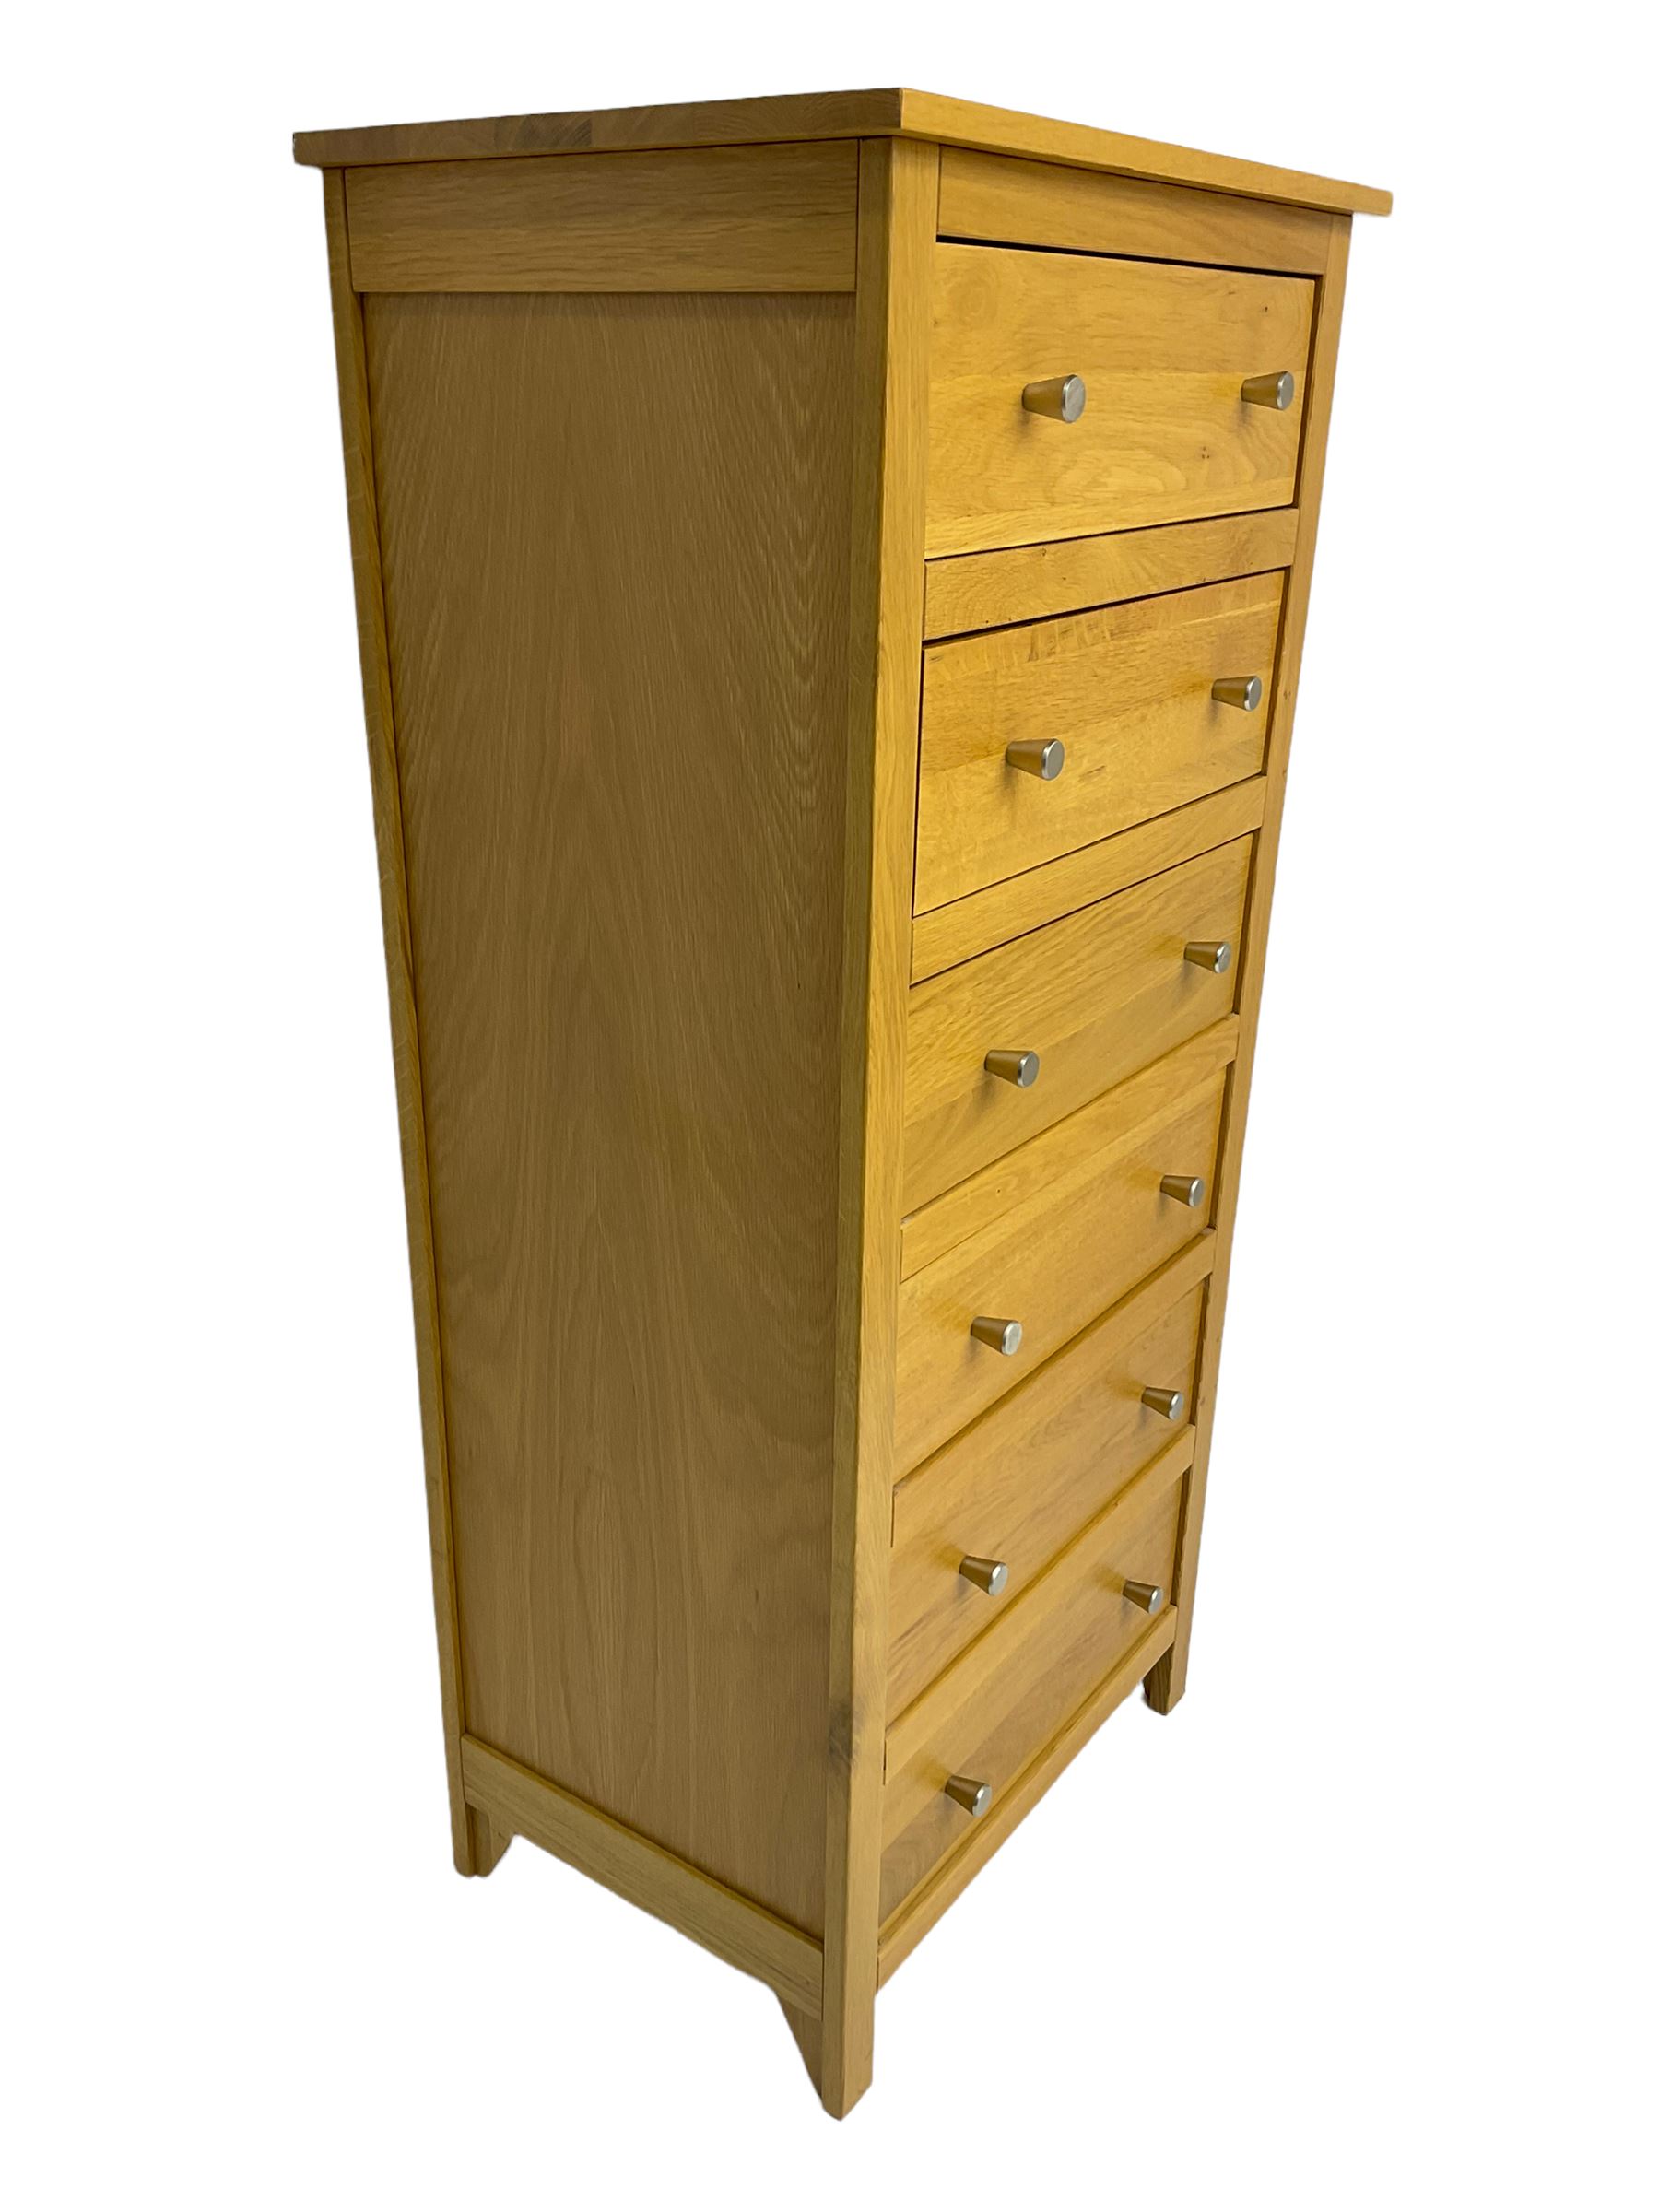 Light oak six drawer chest - Image 2 of 6